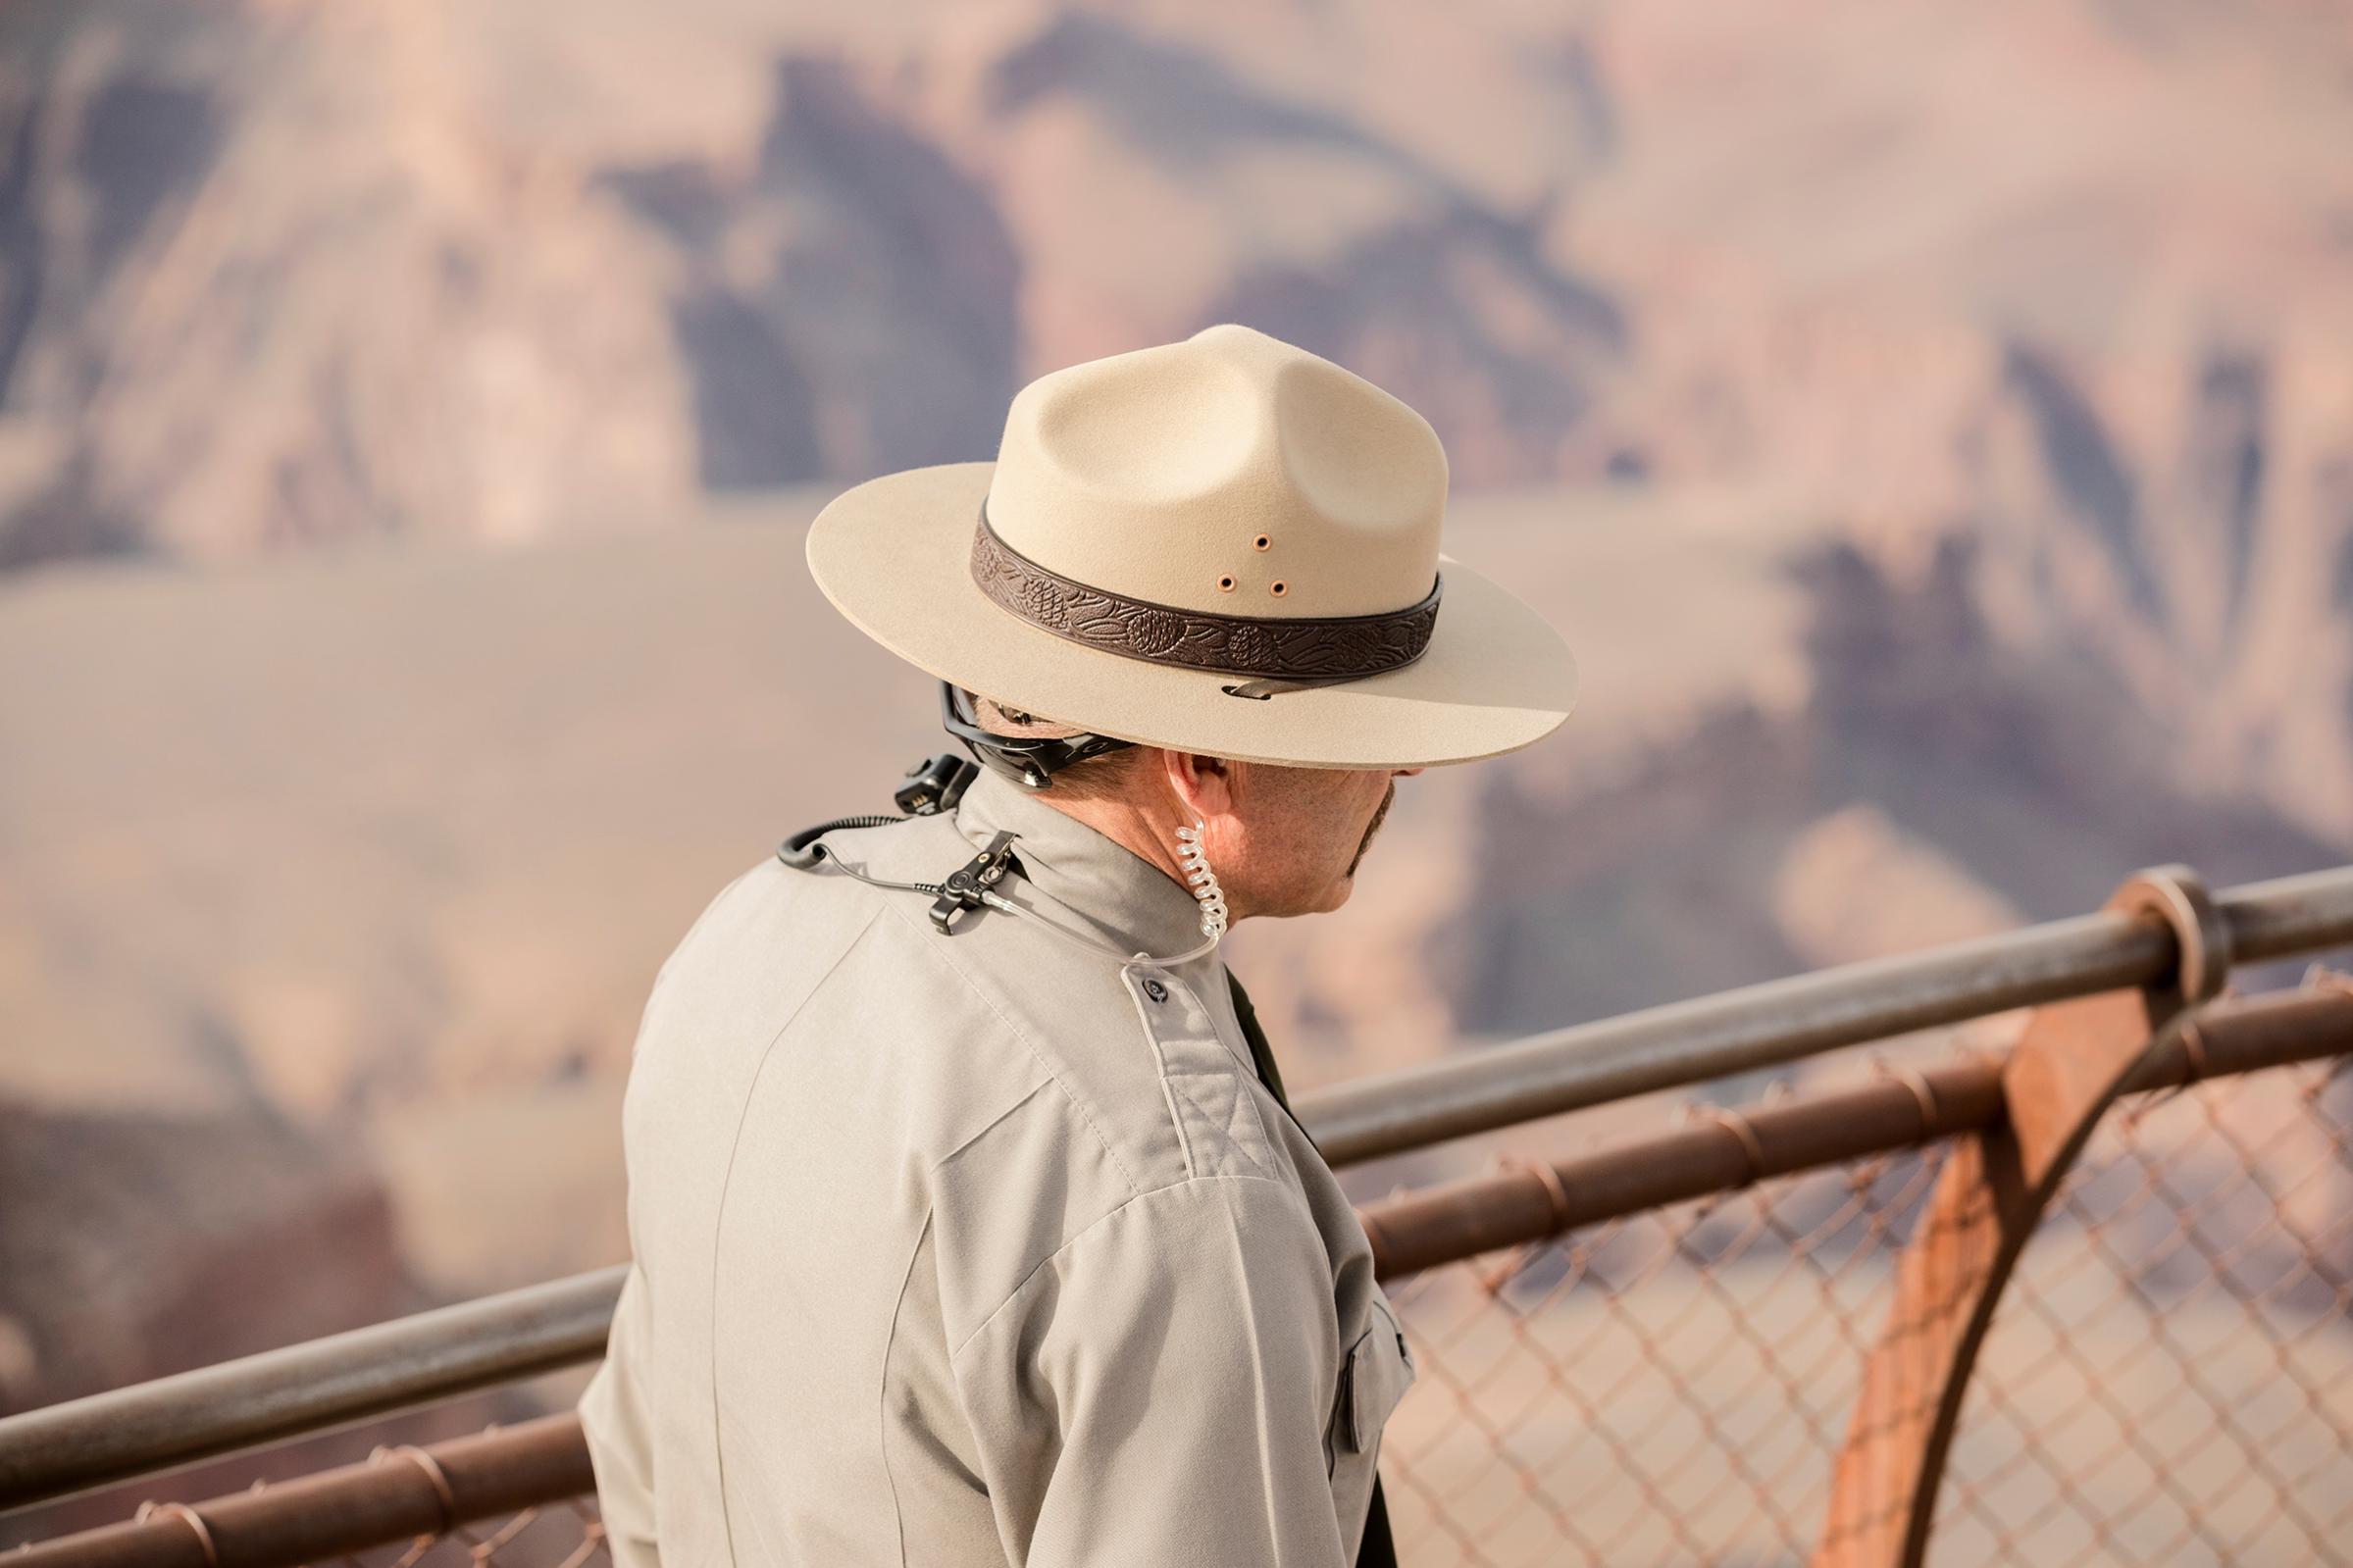 Grand Canyon Chief Ranger Matthew Vandzura